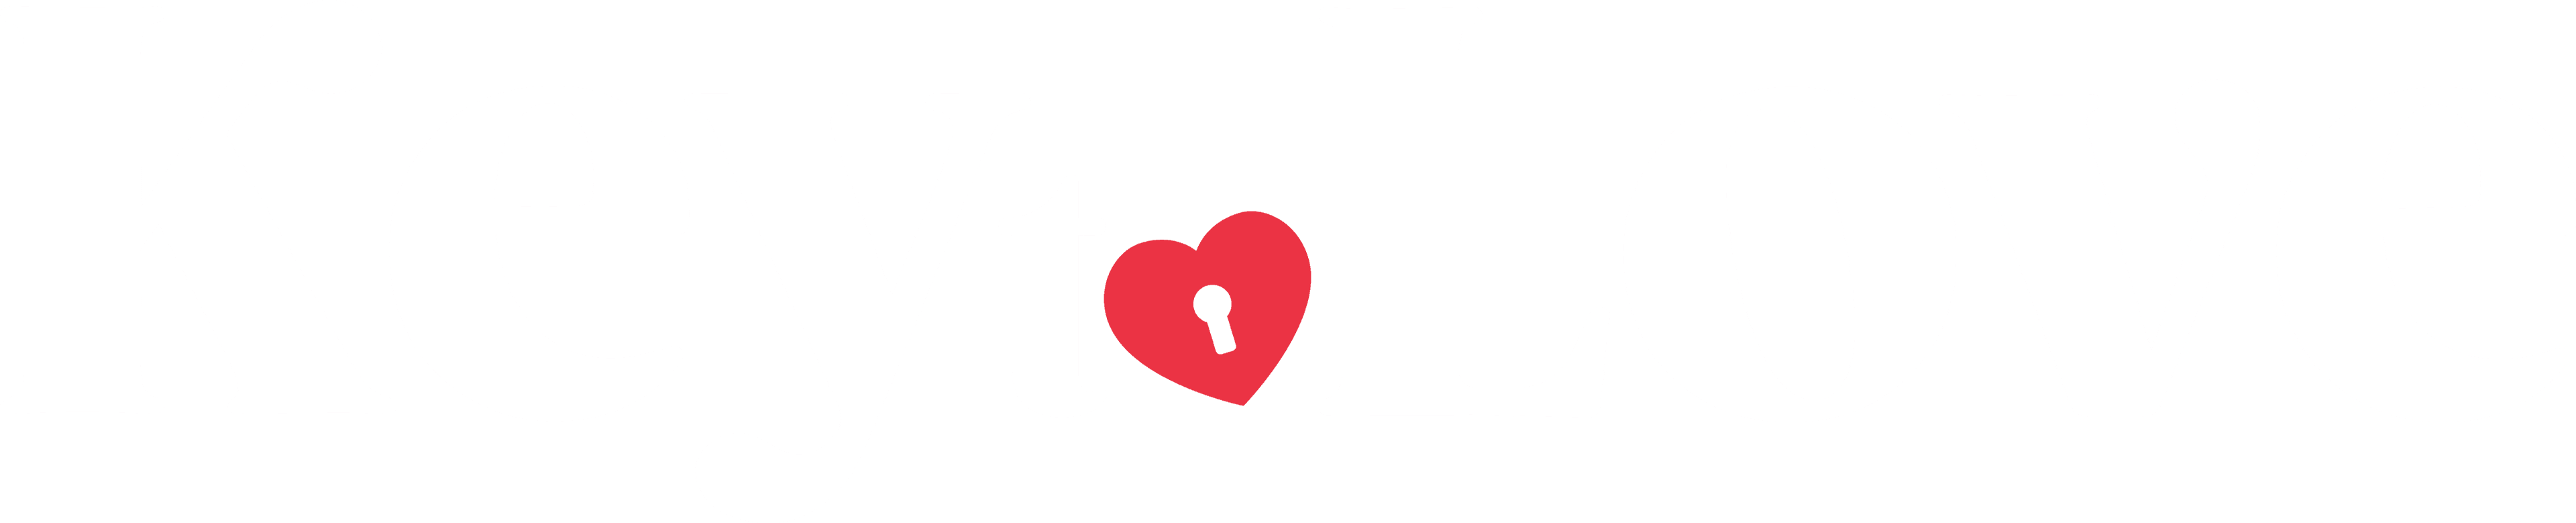 Key to Love logo